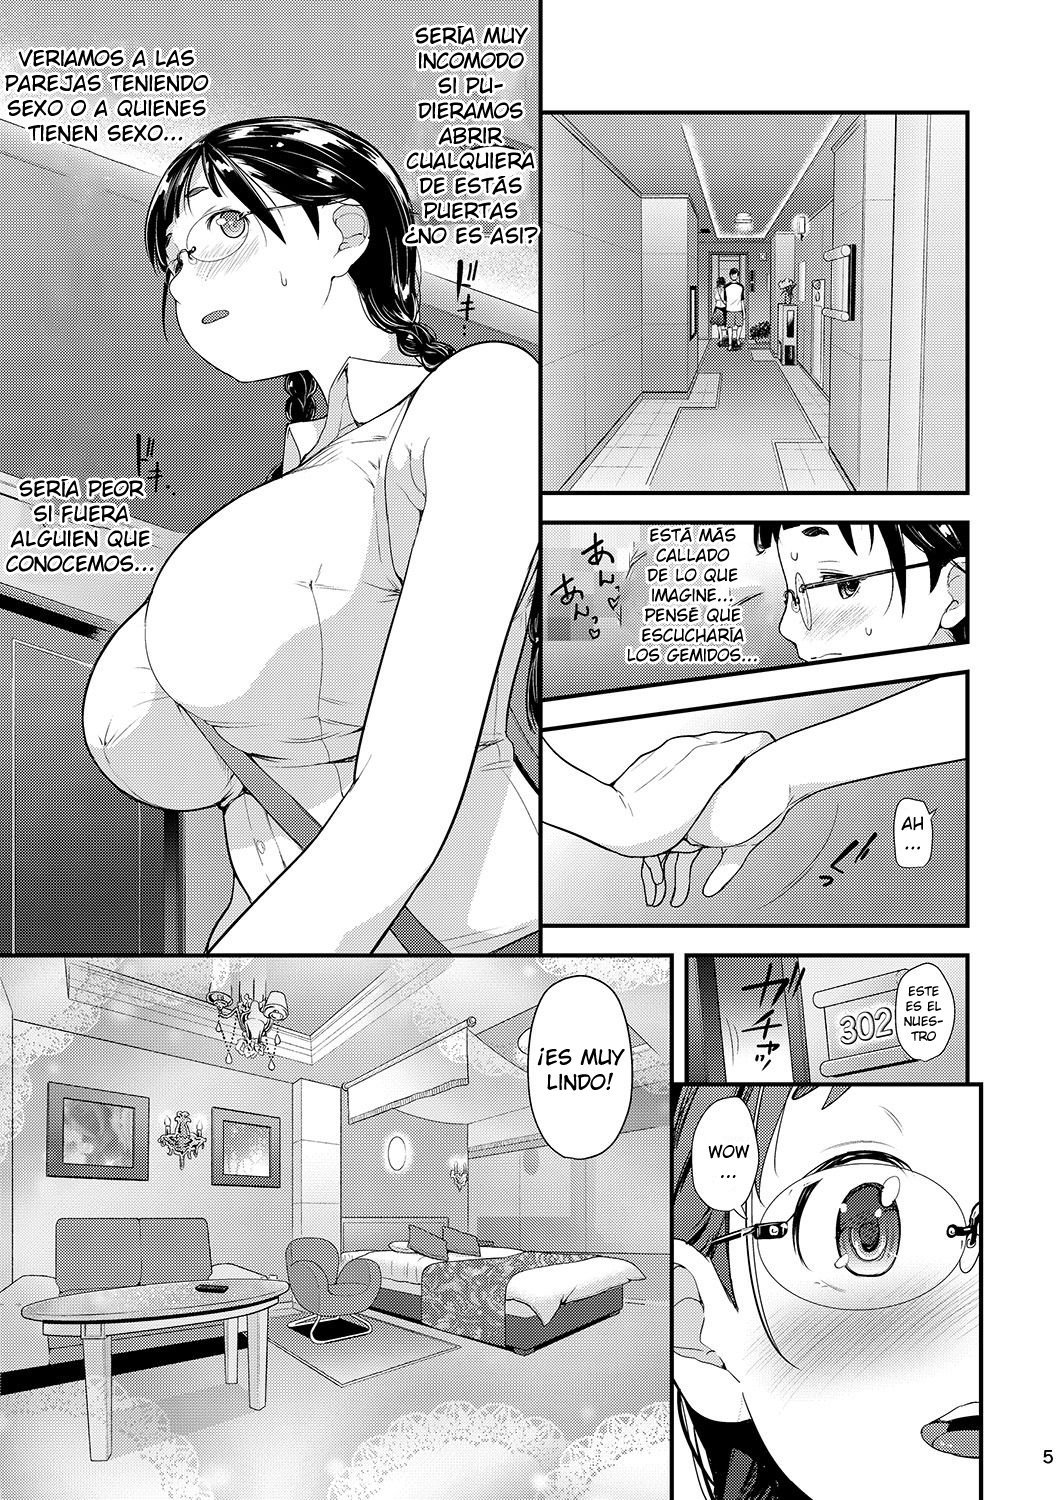 JIMIKO TO ICHINICHIJUU SEX - DAY LONG SEX WITH A PLAIN LOOKING GIRL 3 - 4